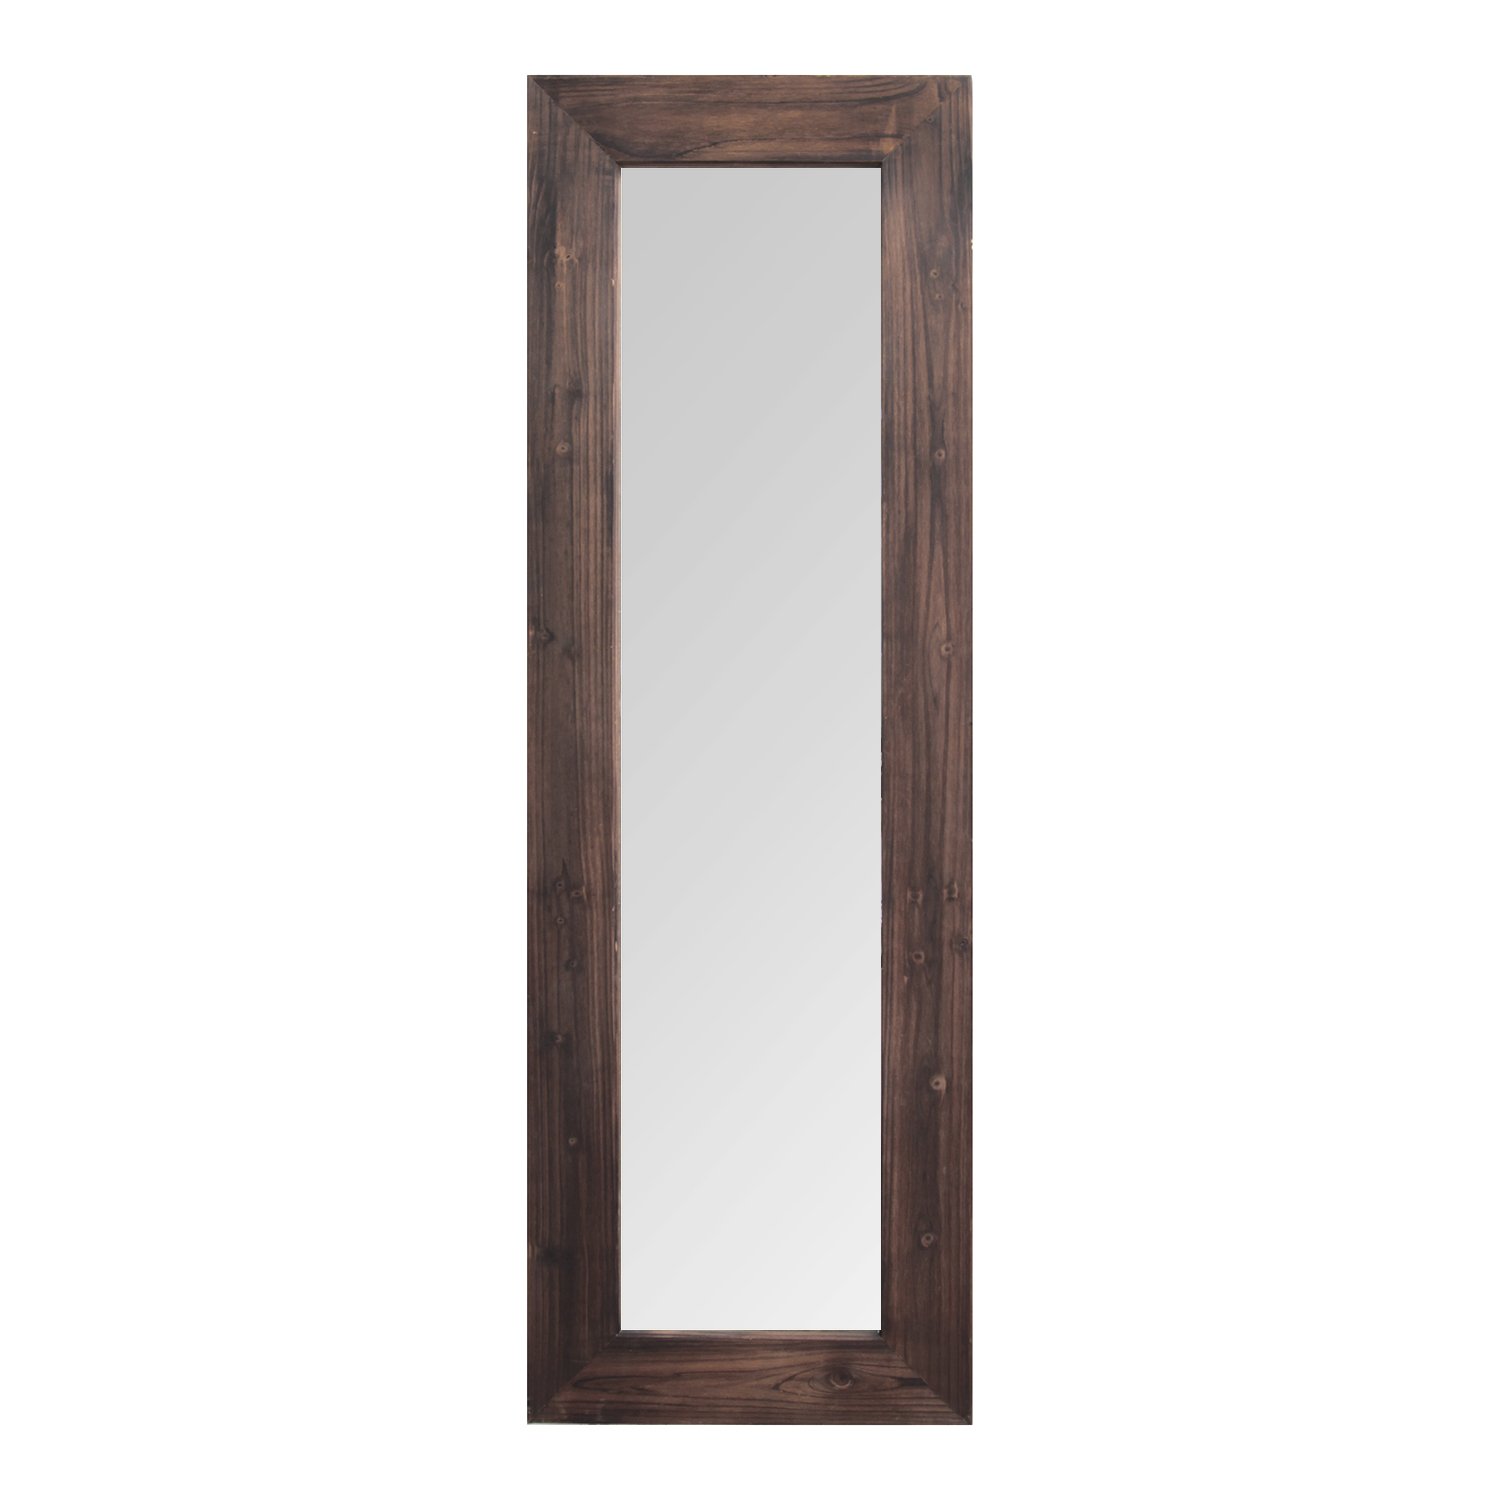 15.94" X 1.26" X 48.03" Dark Natural Wood Long-Length Design Mirror